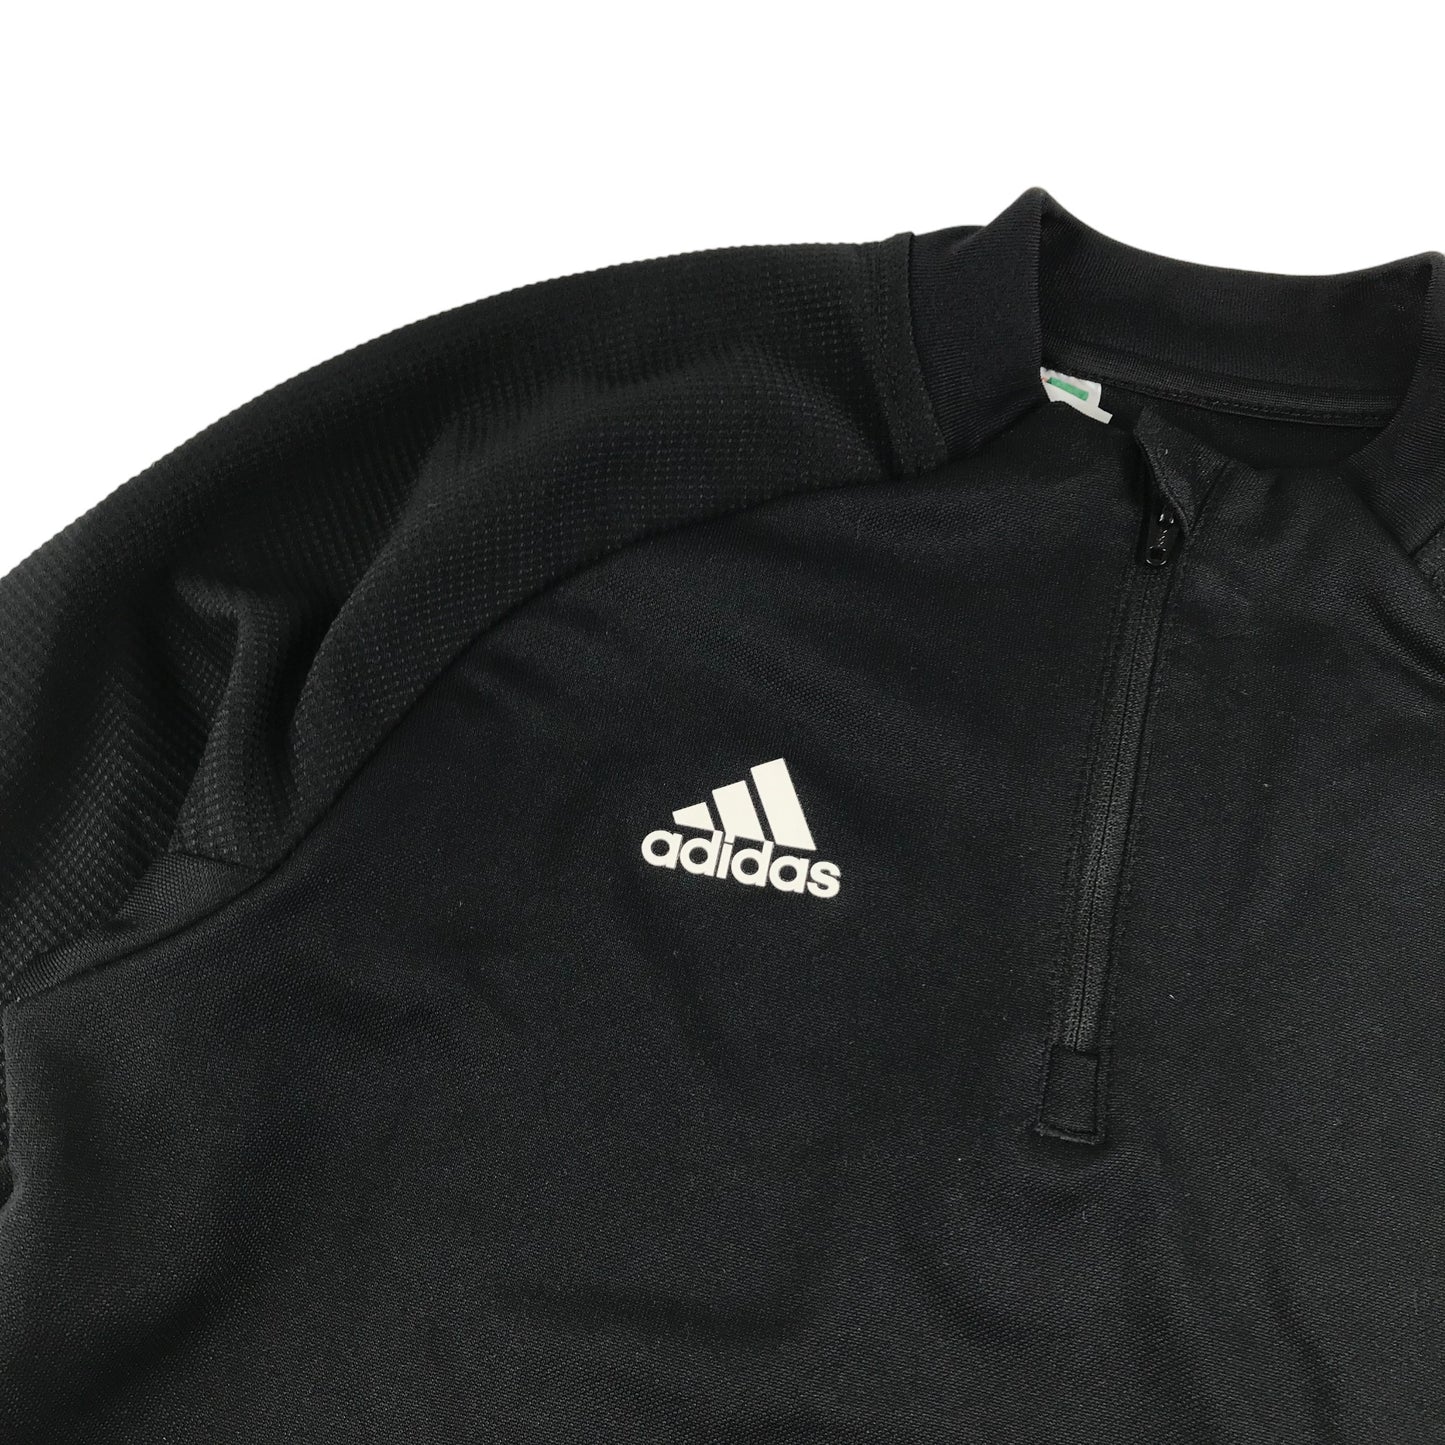 Adidas Sweater Age 11 Black Long Sleeve Sports Top Half Zipper